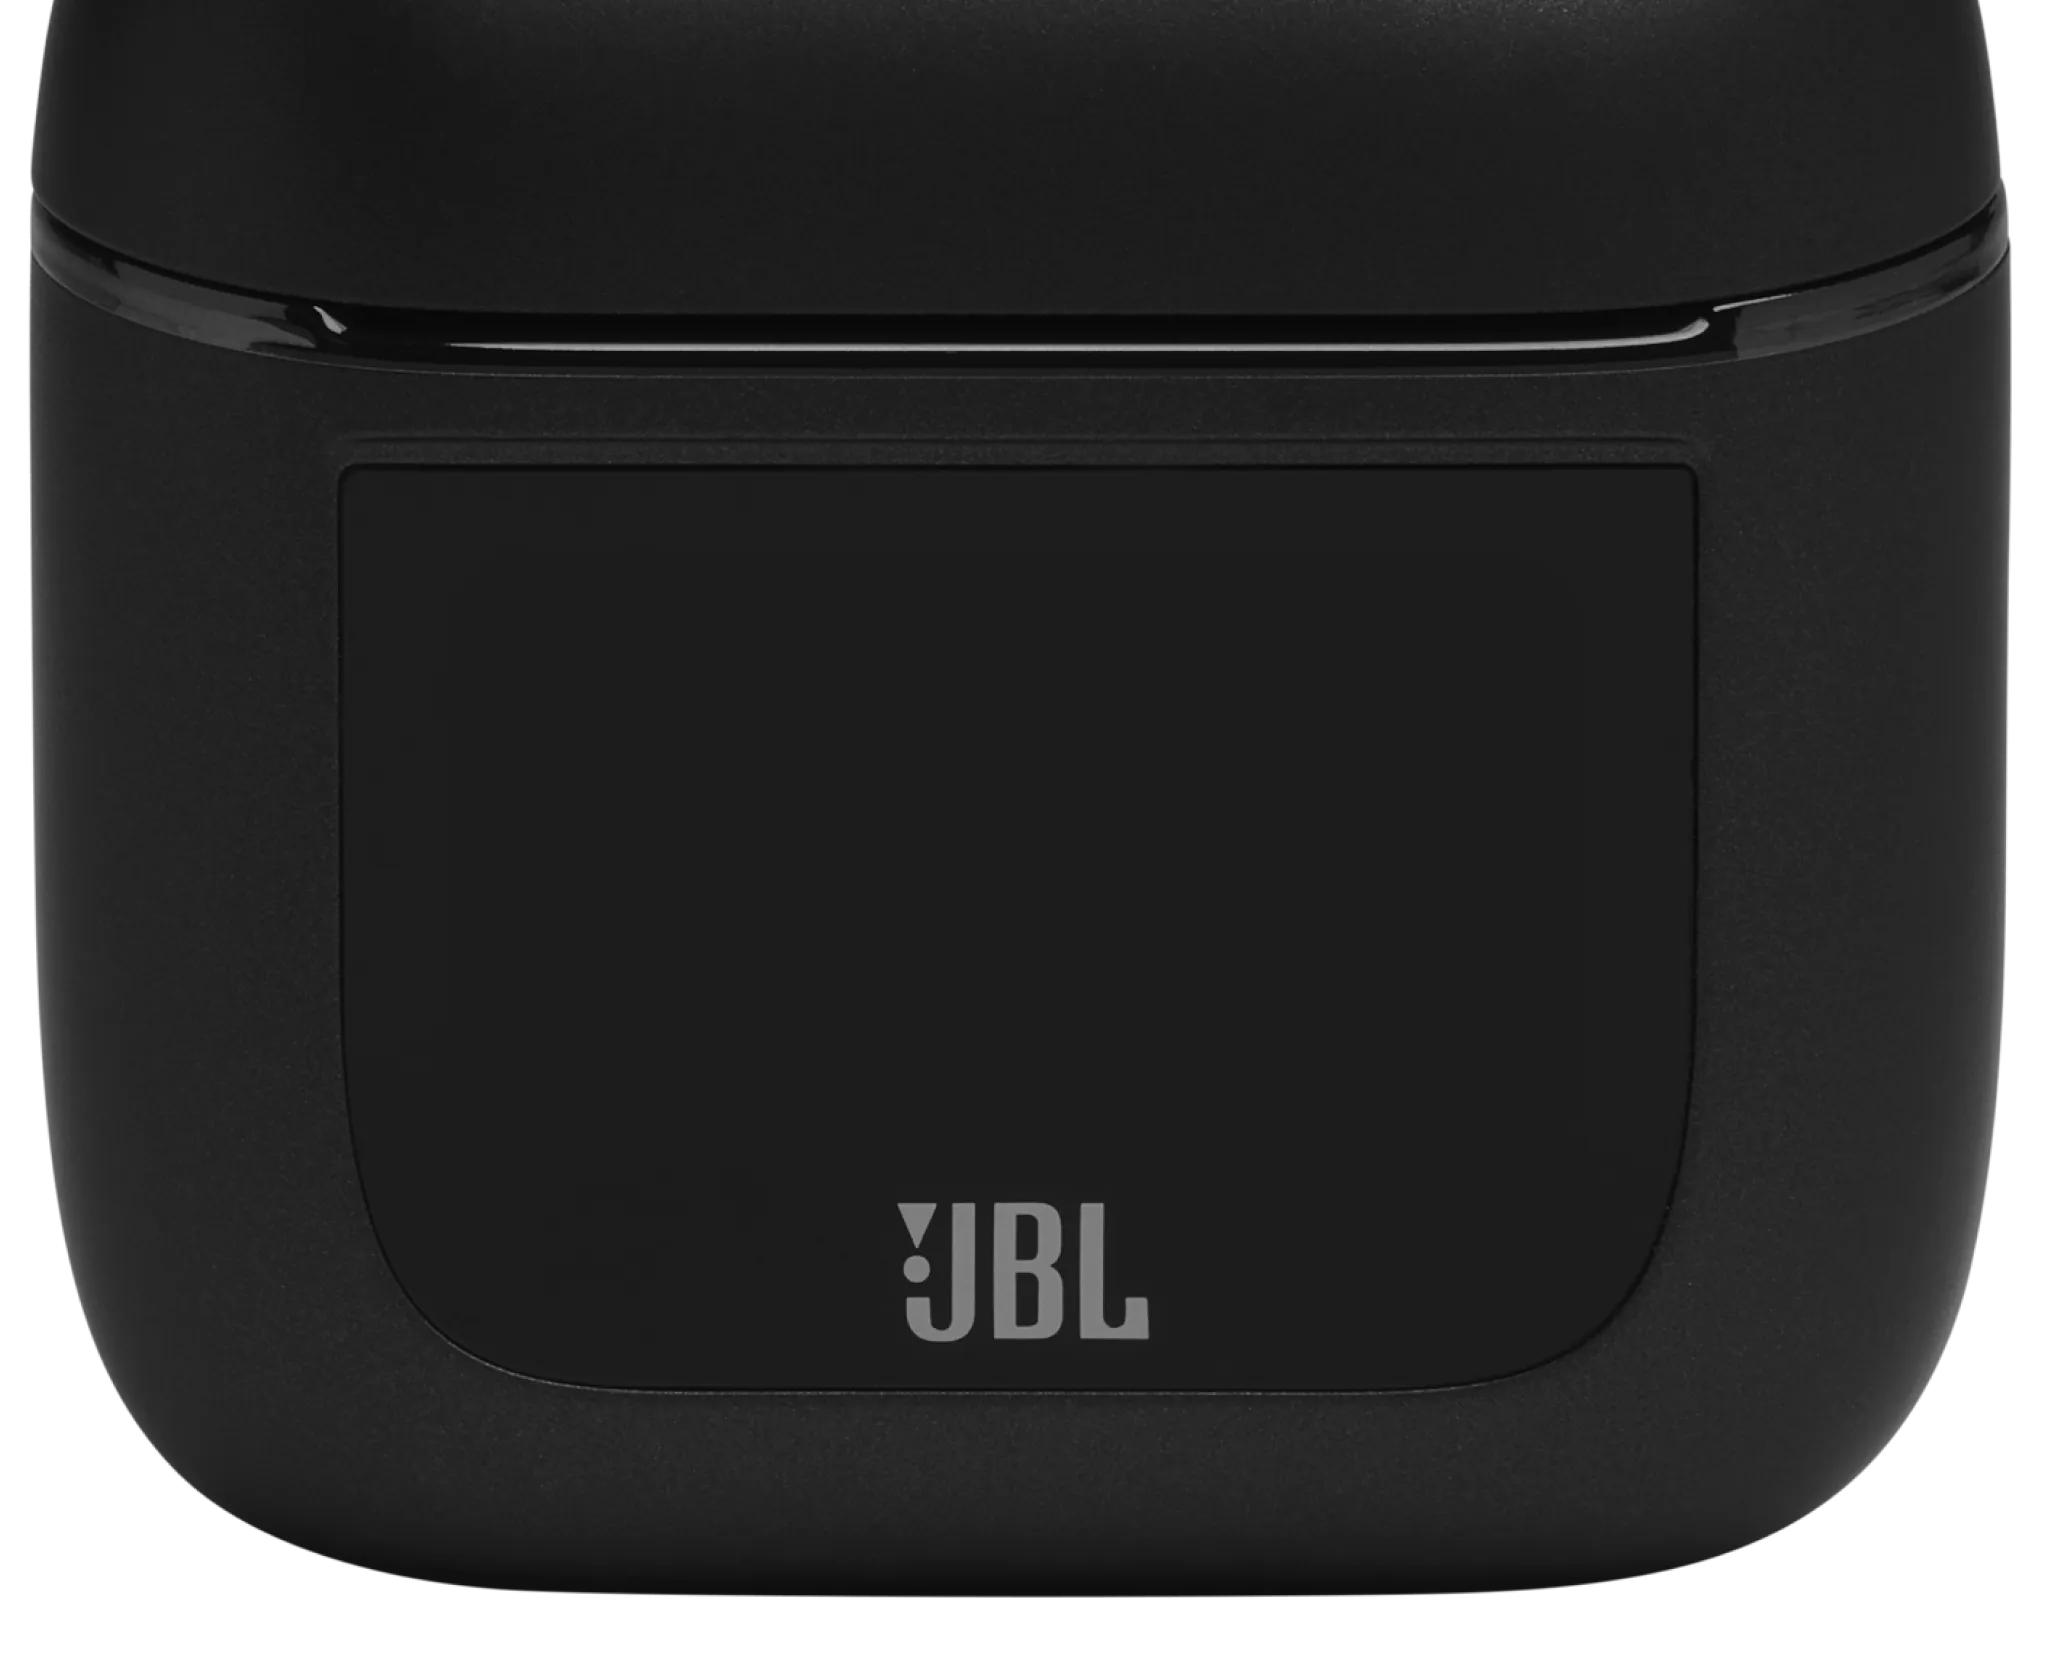 Reseña del JBL Tour Pro 2: Auriculares inteligentes, estuche inteligente.